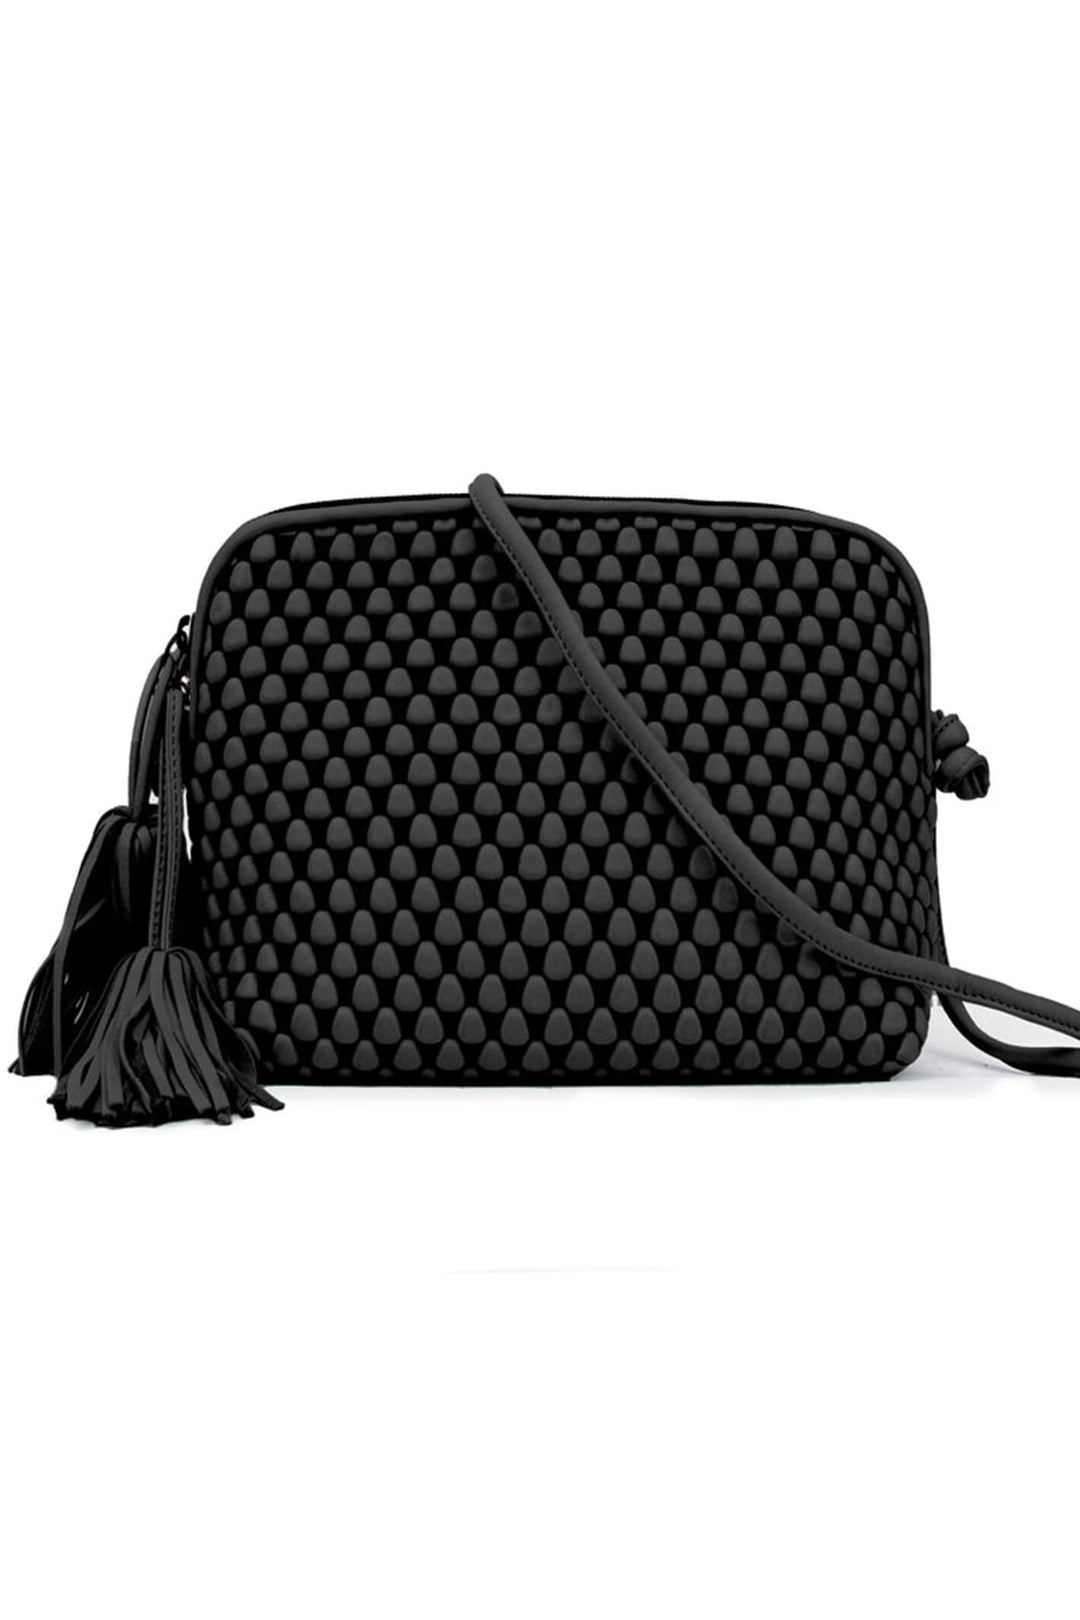 Tissa Fontaneda H03L Gizmo Large Black Crossbody Bag - Olivia Grace Fashion